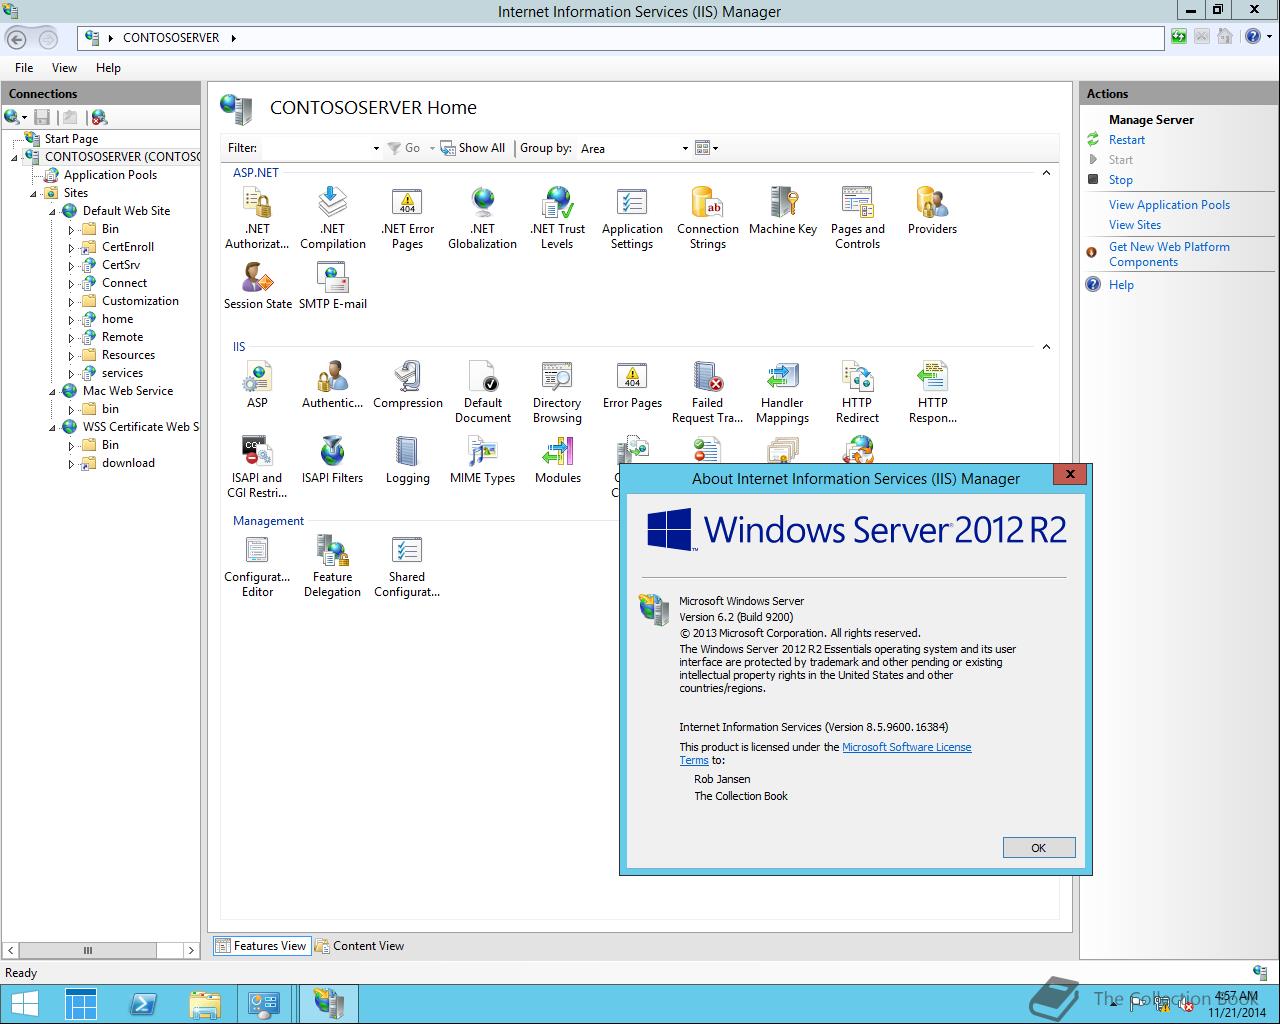 Microsoft Windows Server 2012 R2 Essentials 63960017415 The Collection Book 0452